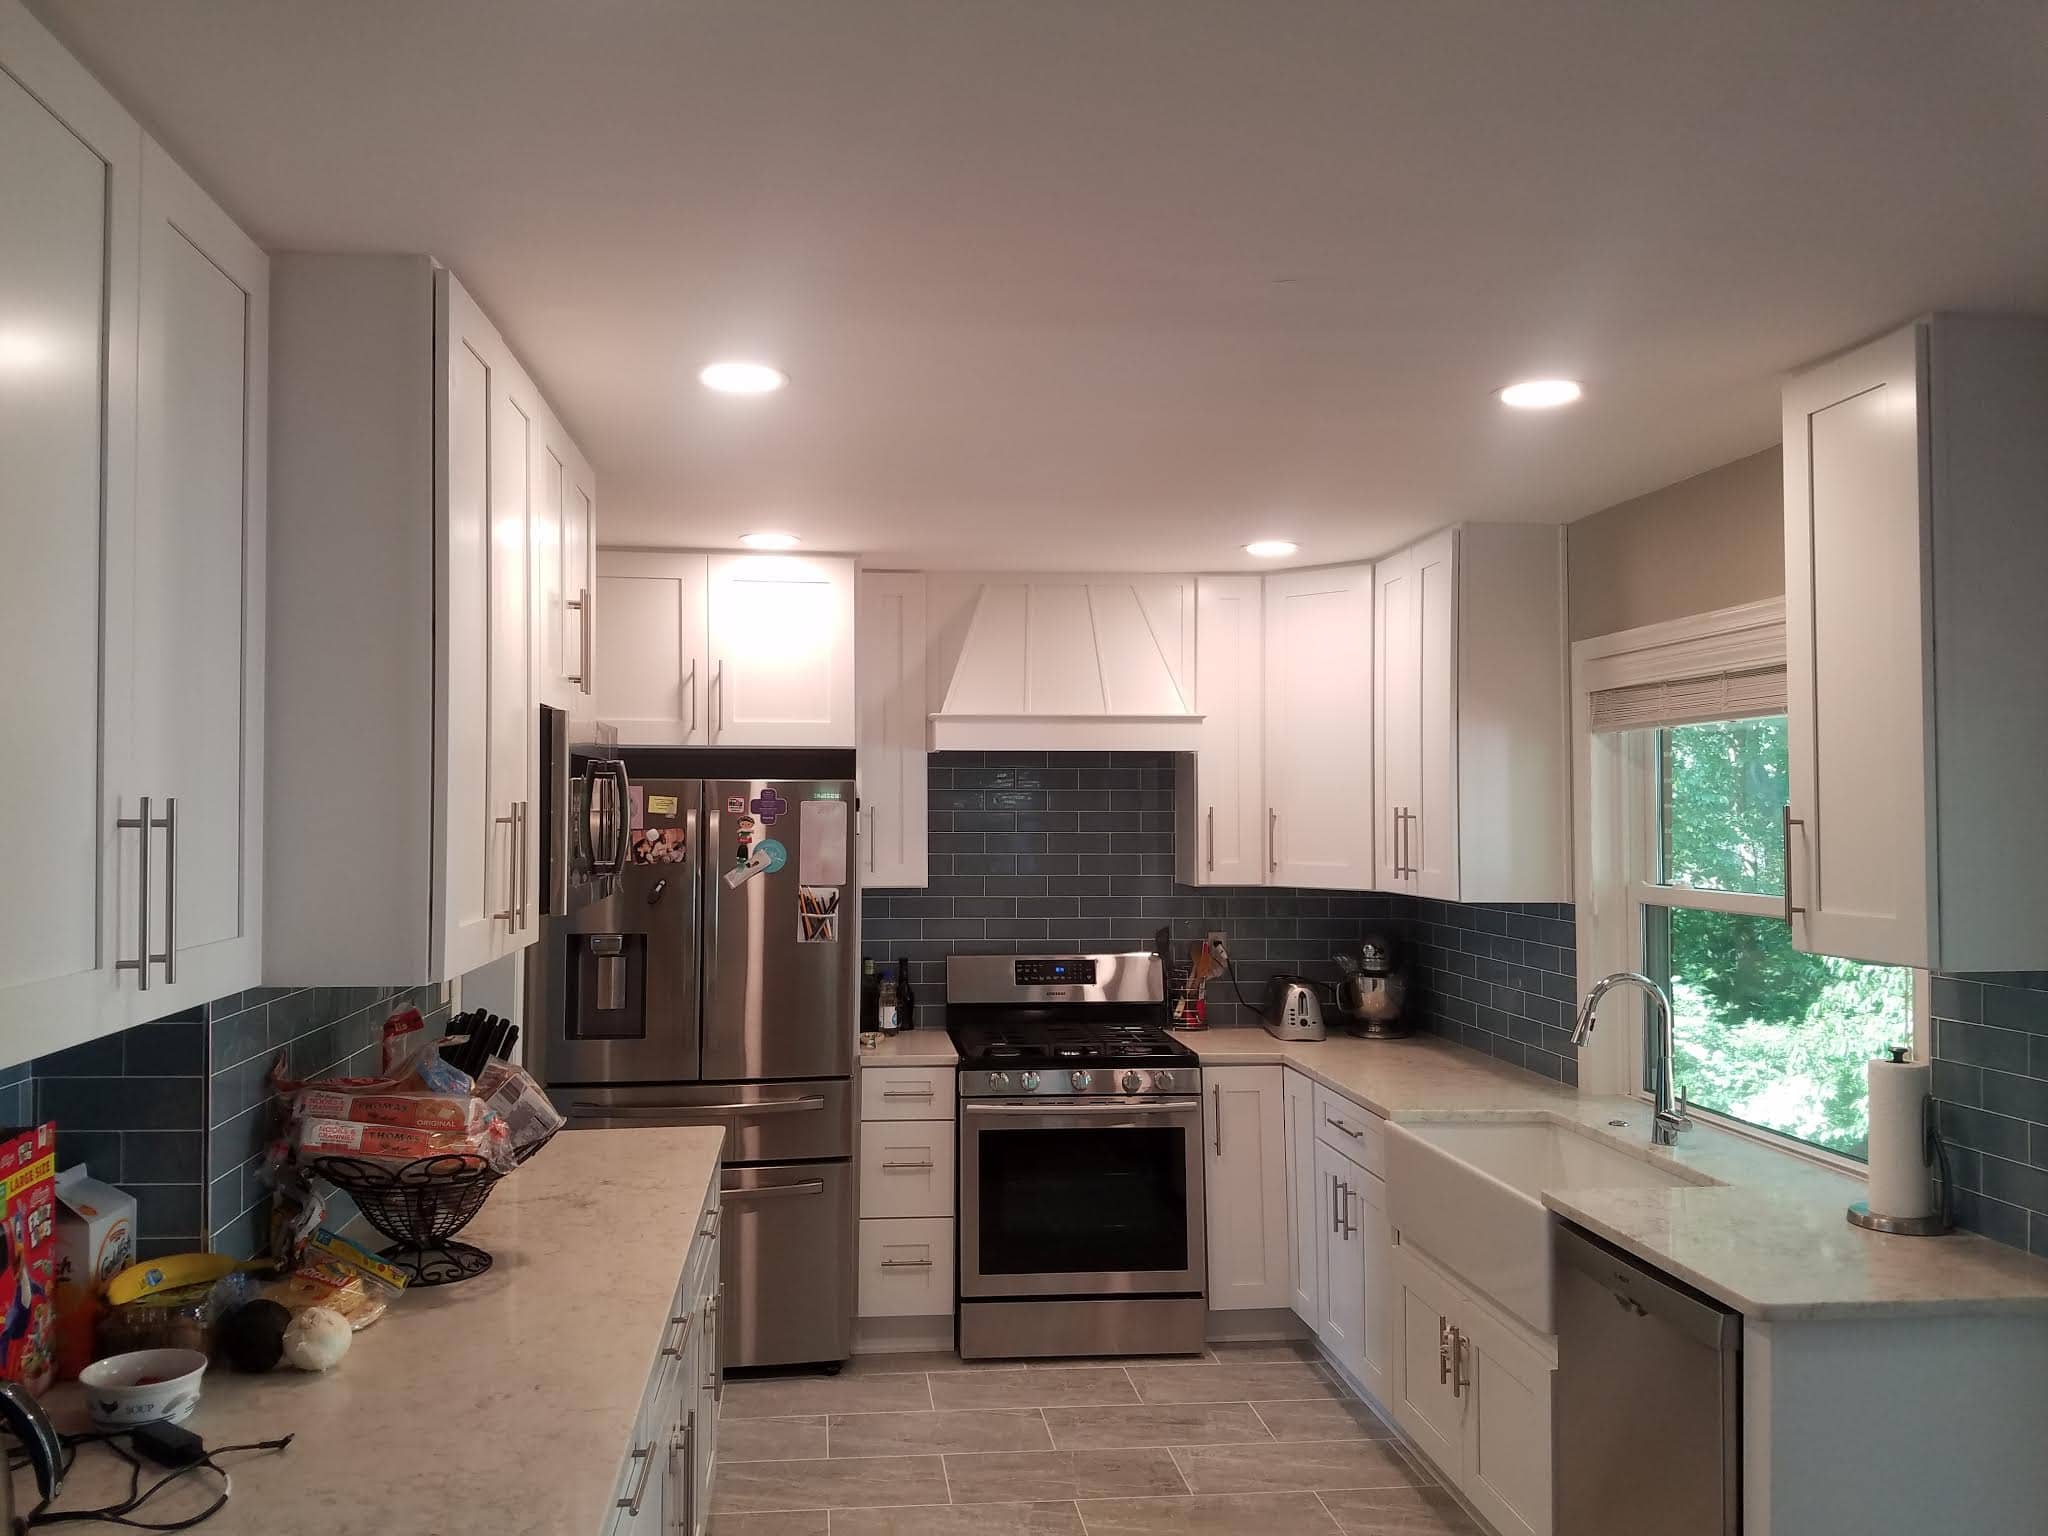 Home Design Inc - Fairfax, VA, US, build and remodeling